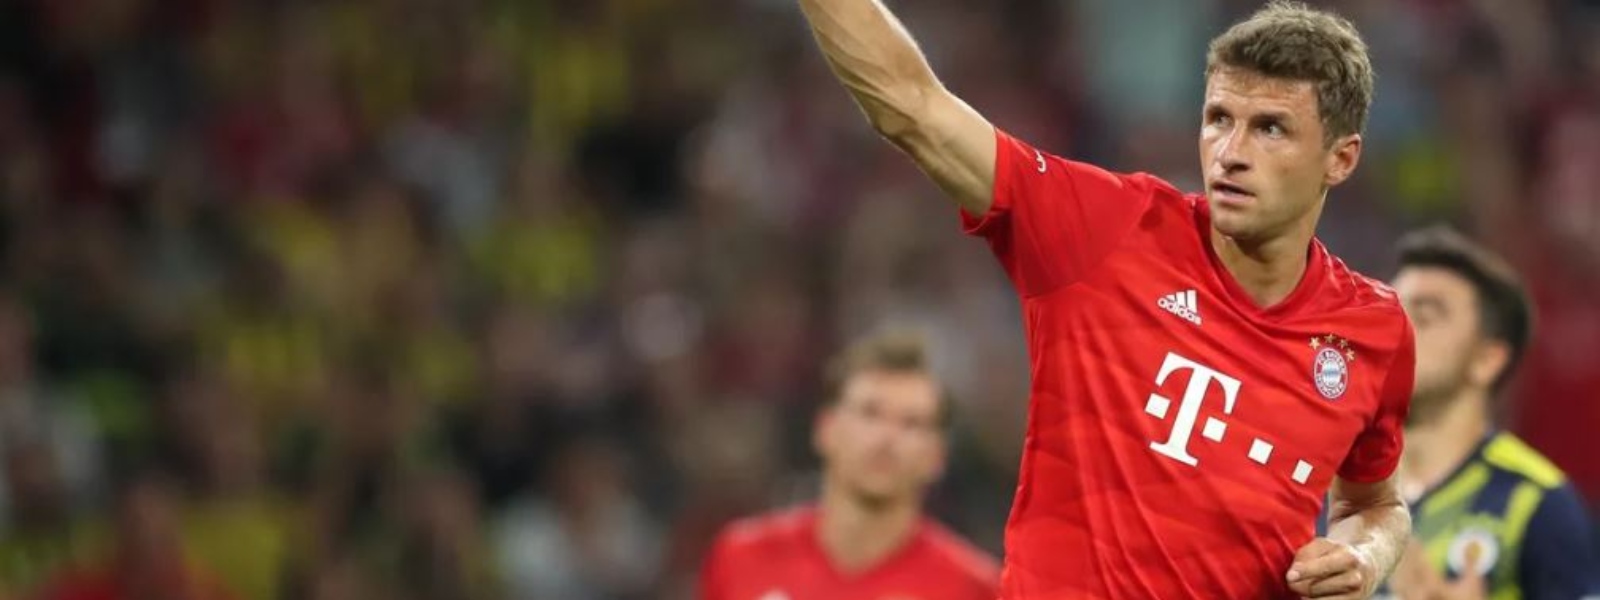 Bayern Munich smash Fenerbahce to reach Audi Cup final with Tottenham